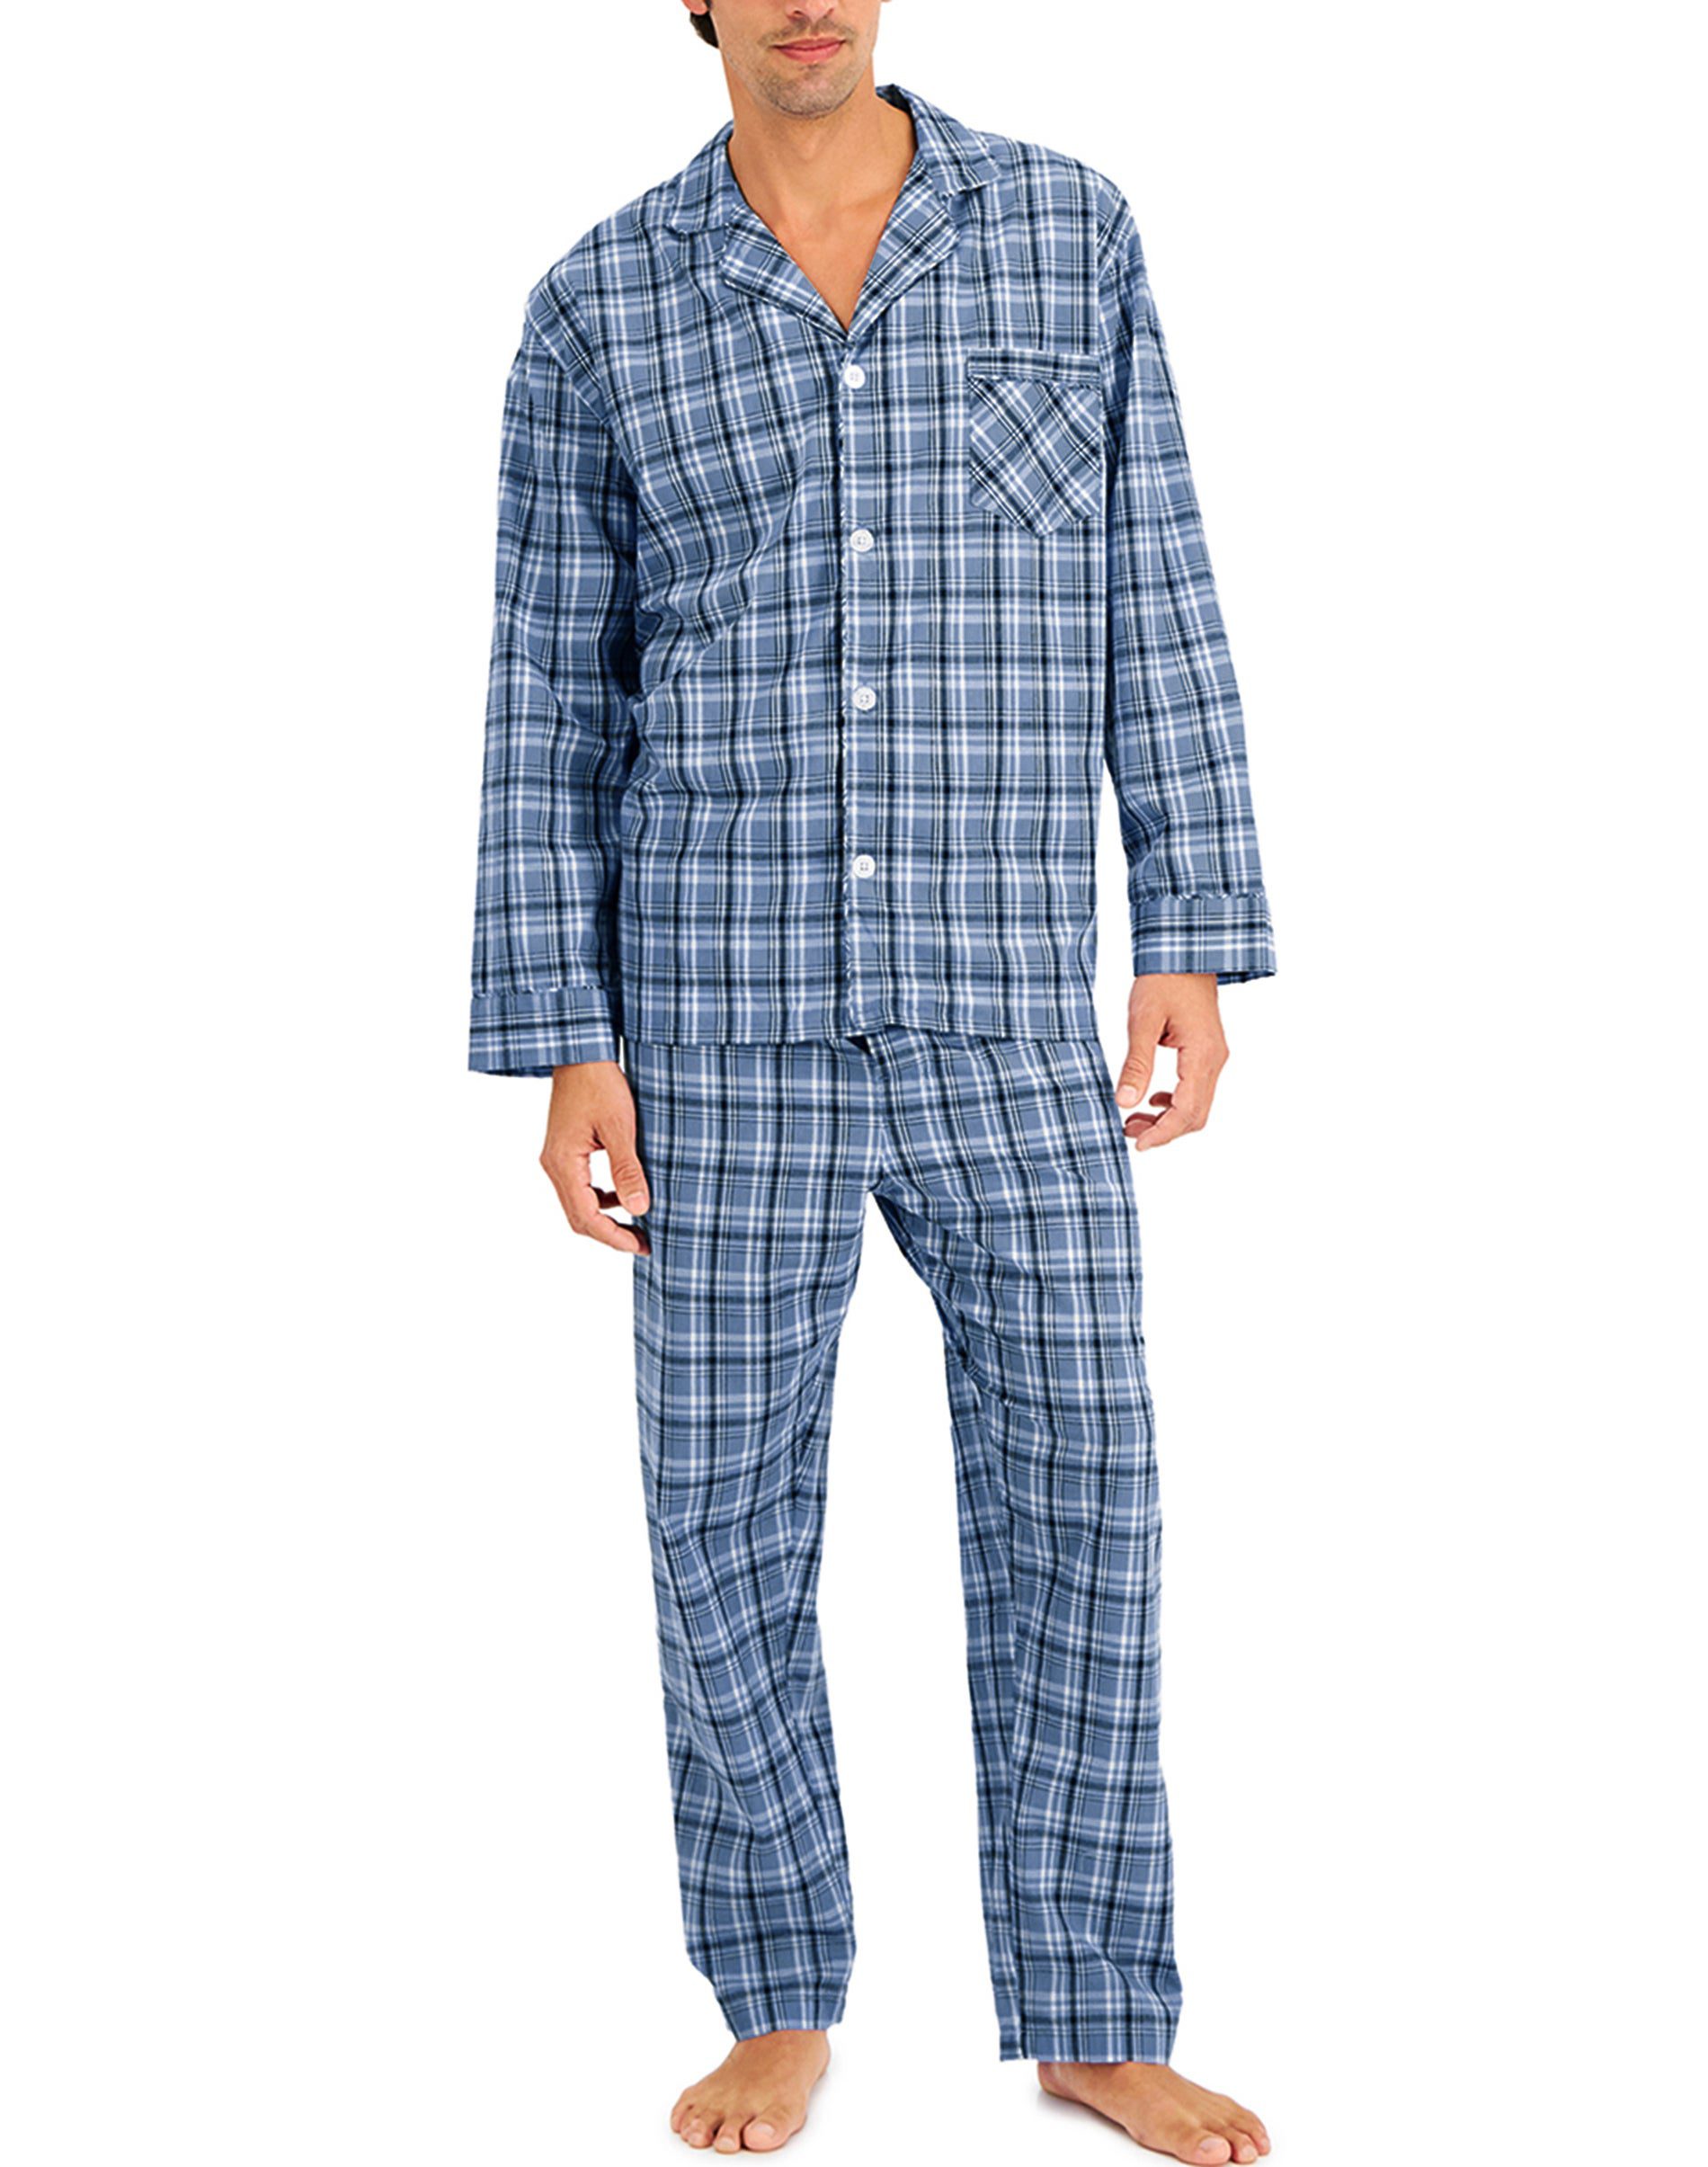 Hanes Mens Woven Pajamas